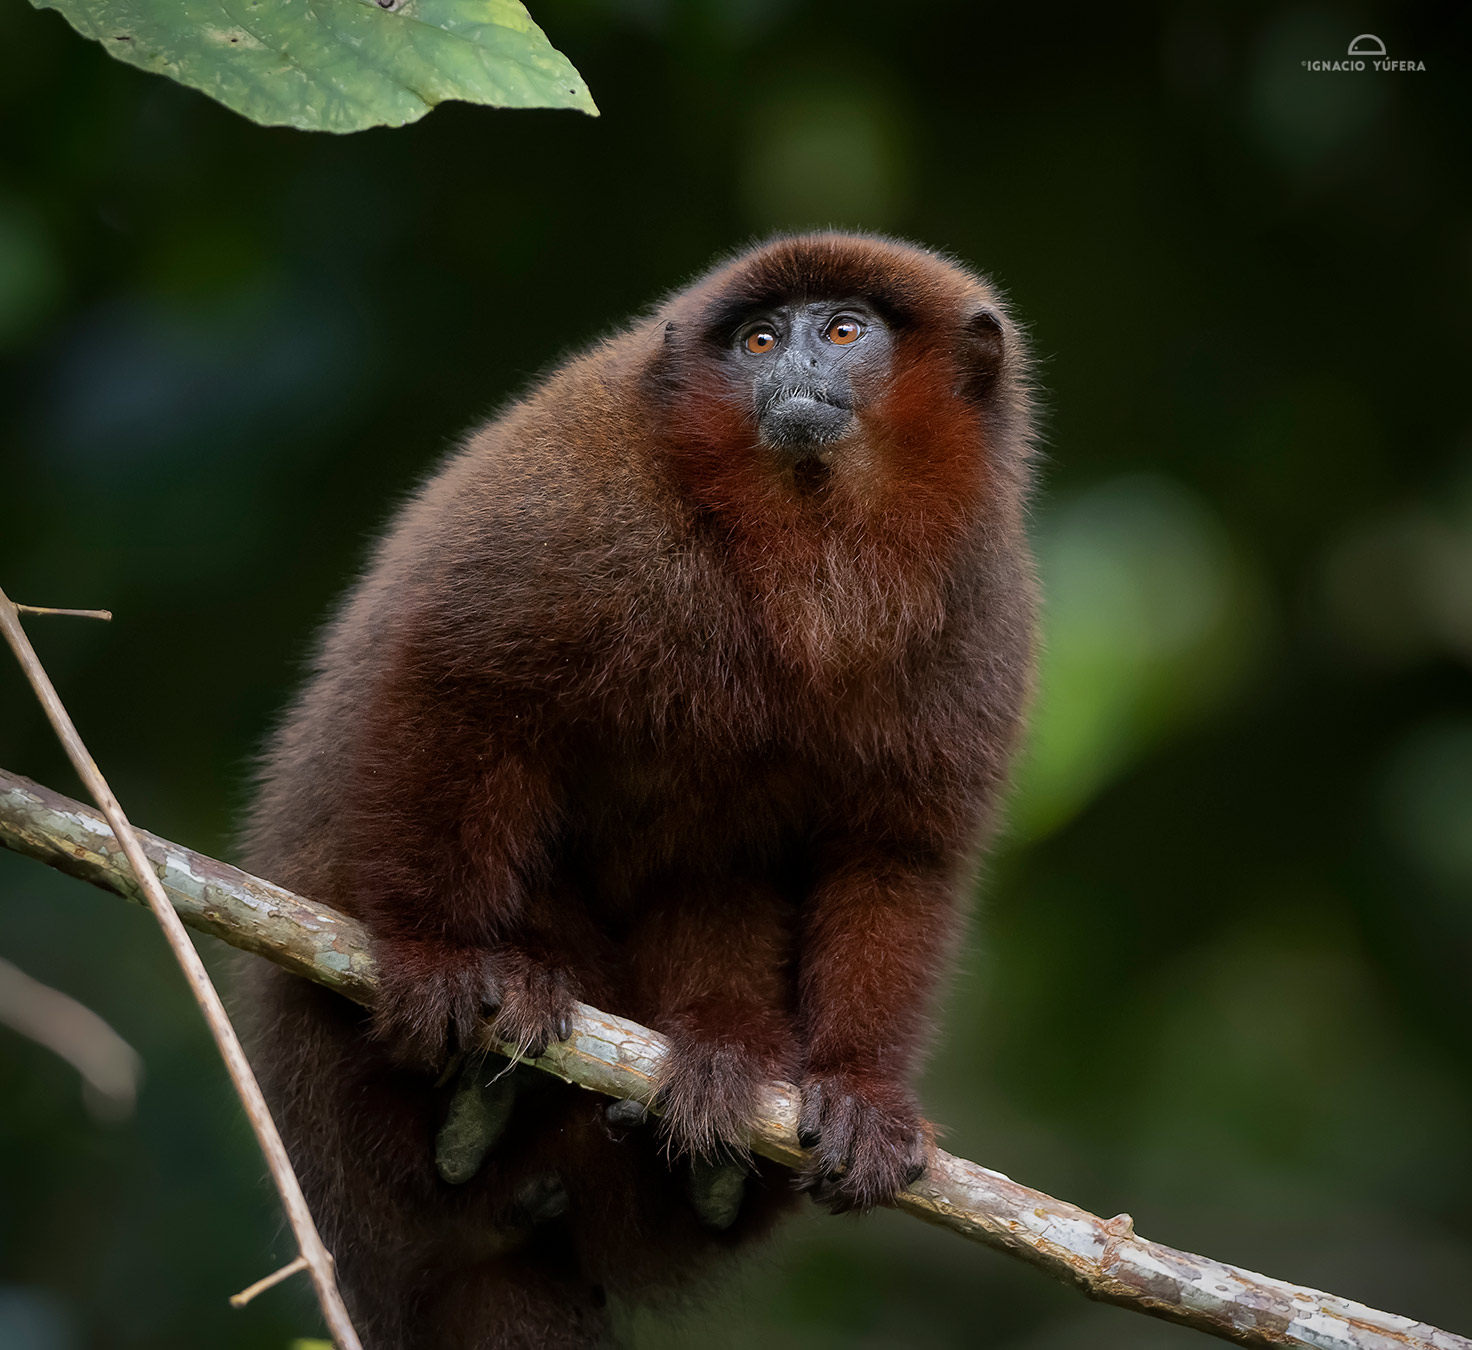 Brown Titi Monkey (Plecturocebus brunneus), Madre de Dios, Peru